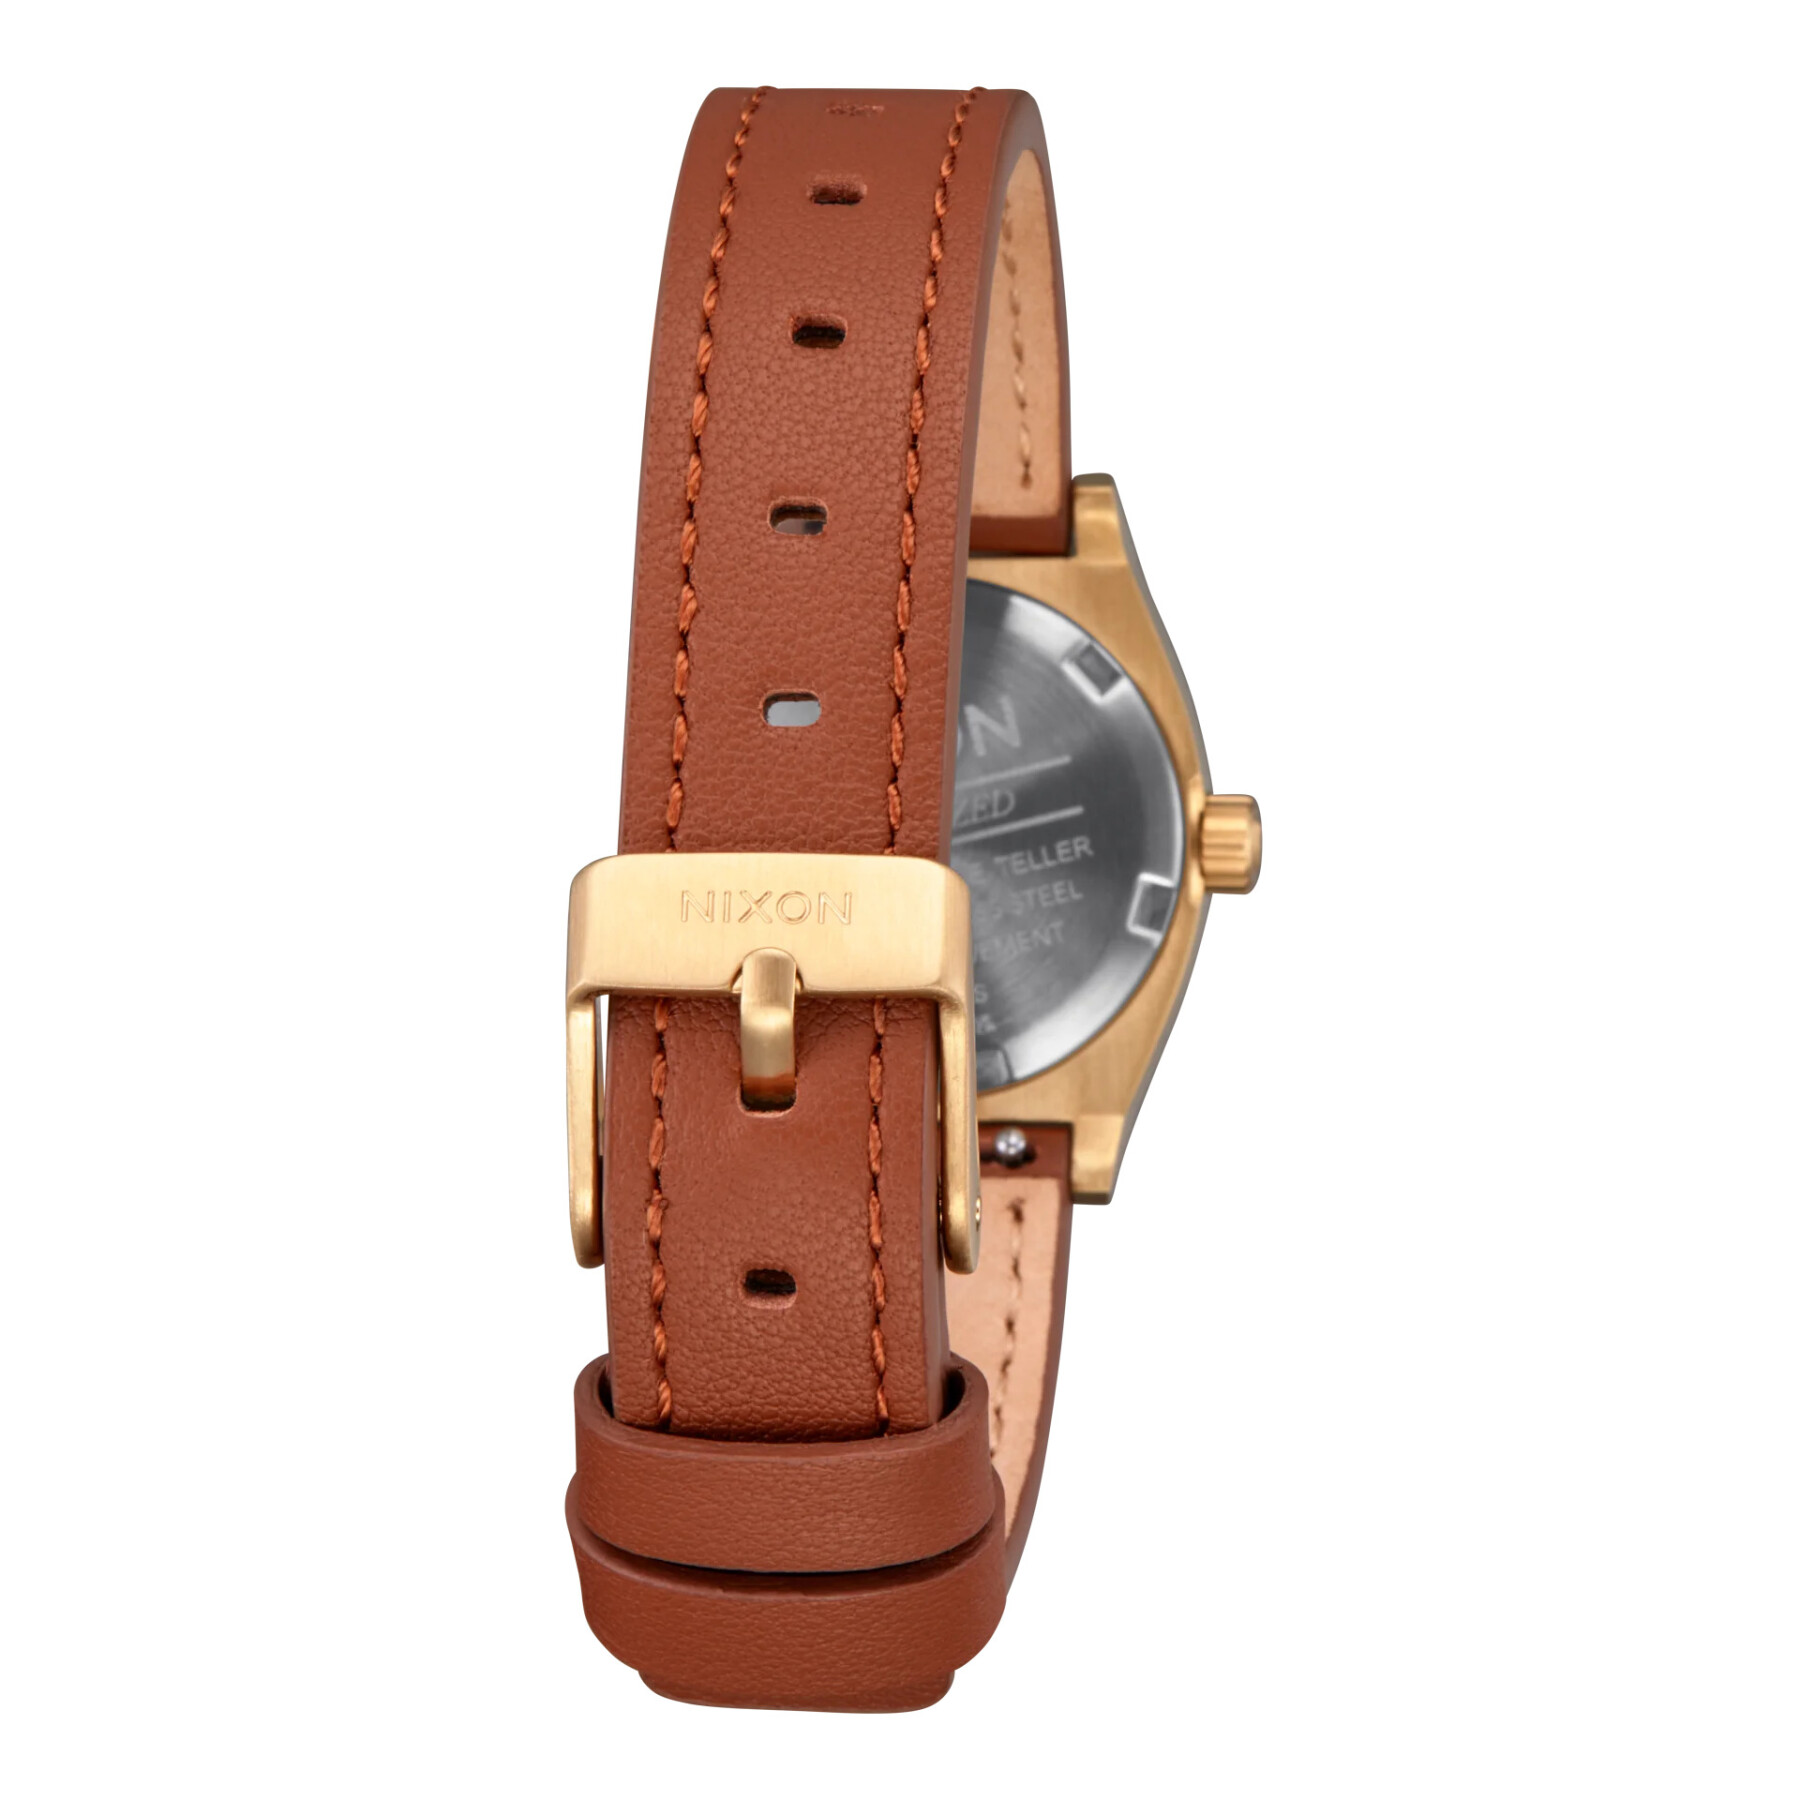 Reloj para mujer Nixon Small Time Teller Leather